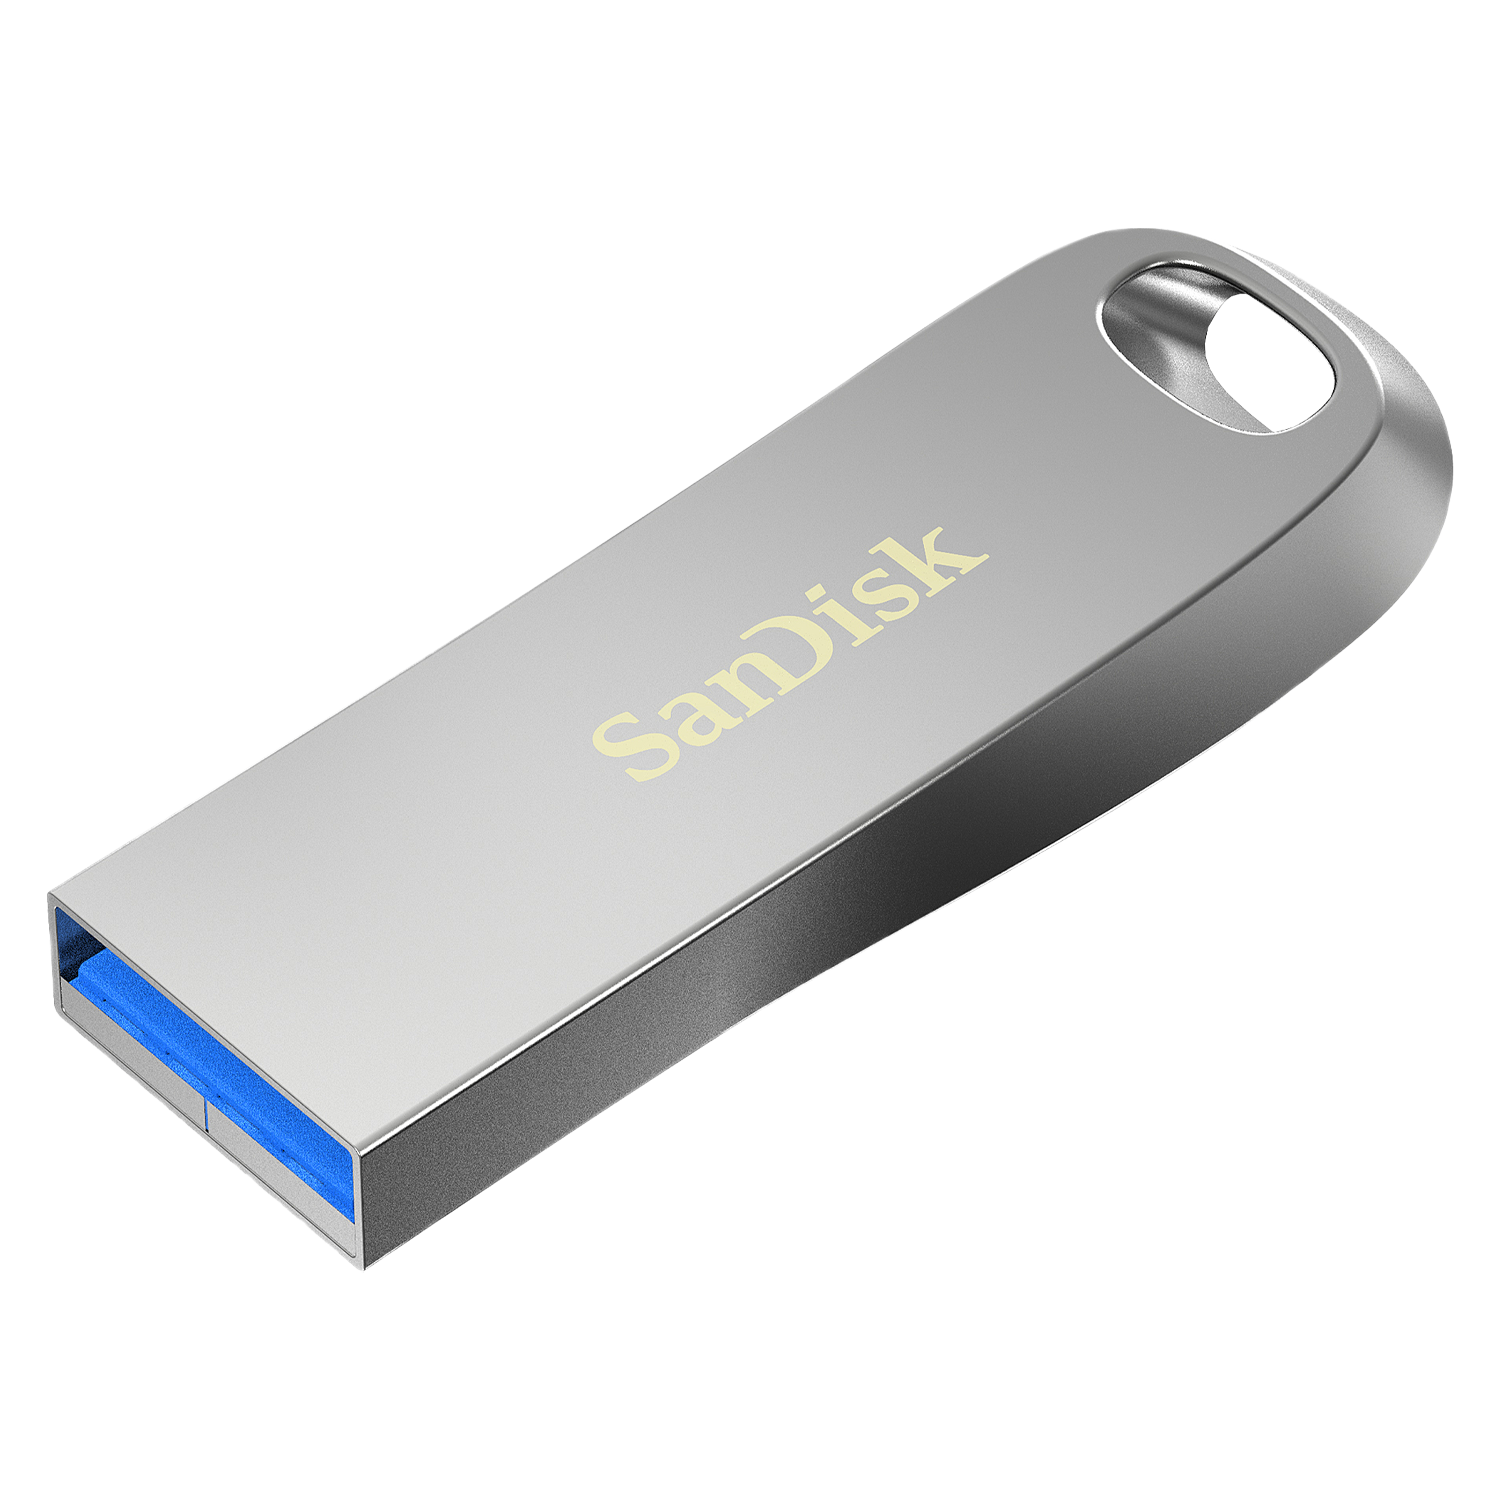 Pendrive Sandisk Ultra Luxe Z74TRA 16GB / USB 3.1 - Prata (SDCZ74-16G-G46)